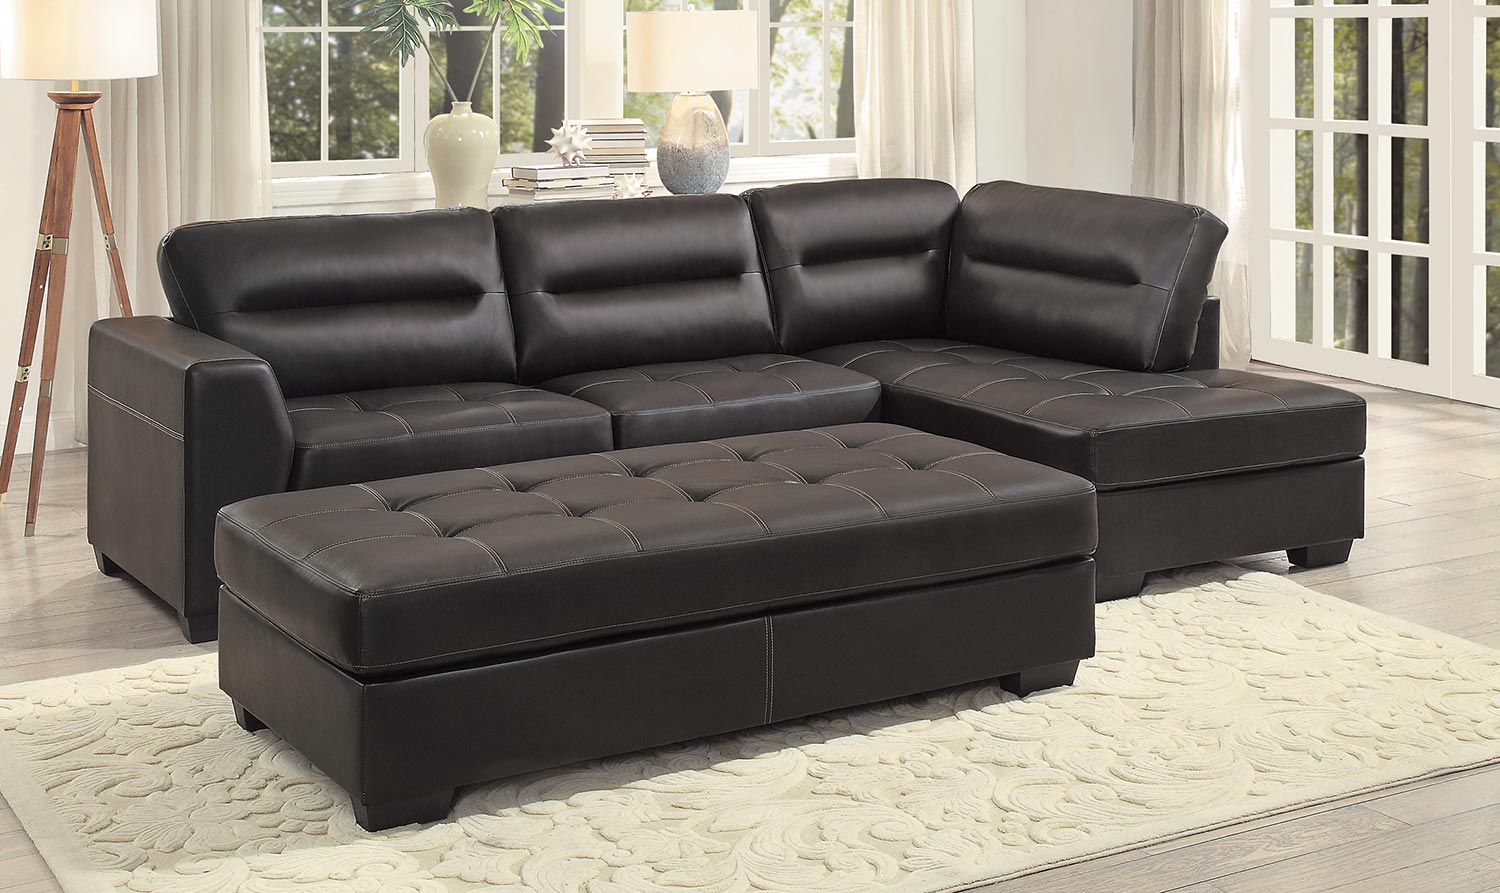 Homelegance Terza Sectional Sofa Set - Dark Brown AirHyde